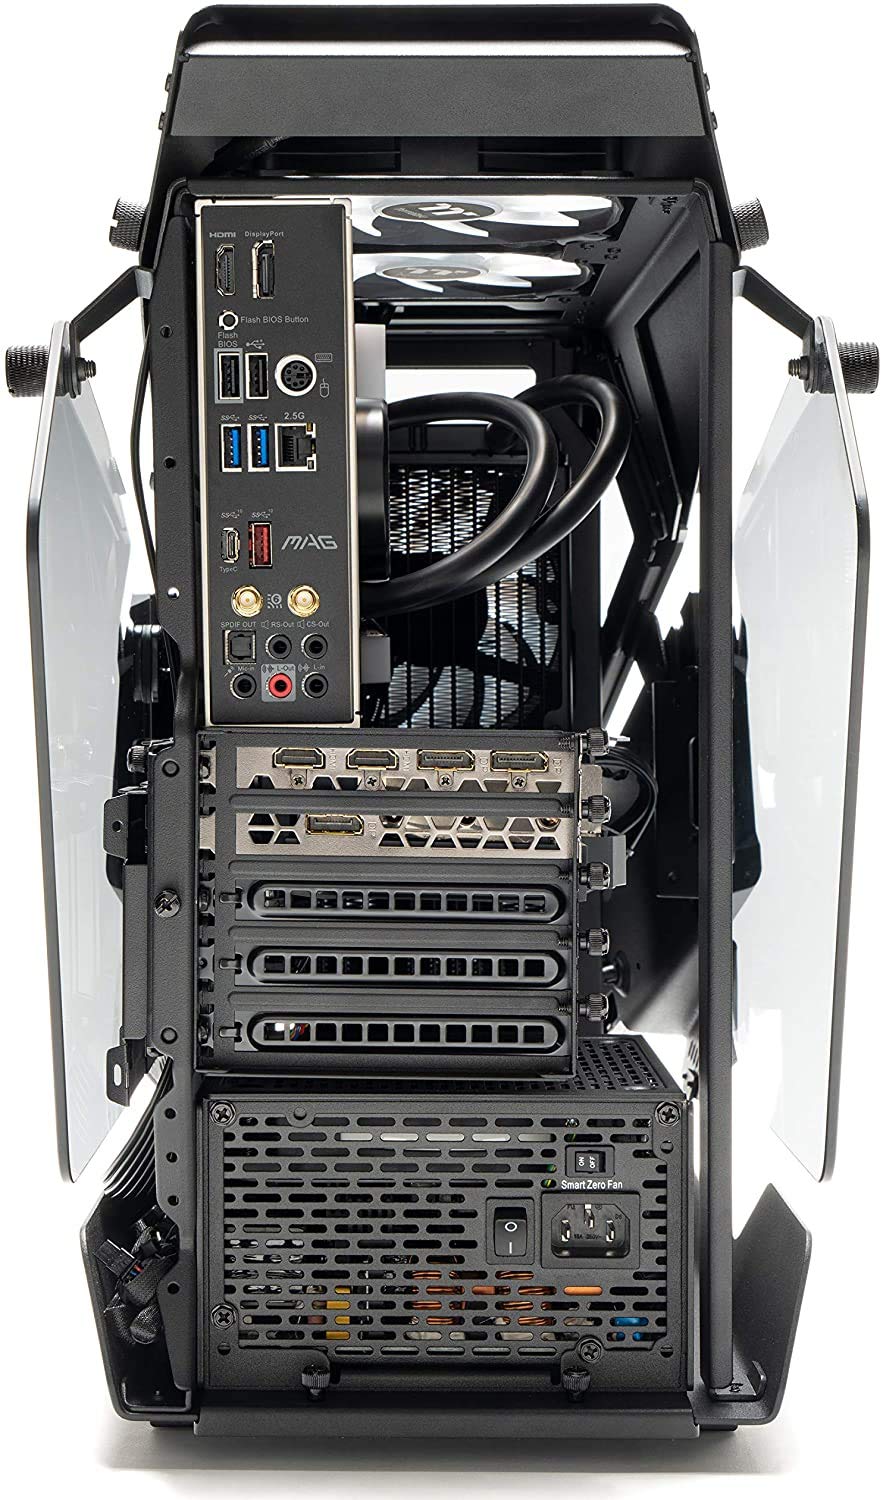 Thermaltake LCGS AH-380 AIO Liquid Cooled Gaming PC (AMD Ryzen 9 3900X 12-core, ToughRam DDR4 3600Mhz 16GB RGB, NVIDIA GeForce RTX 3080, 1TB NVMe Gen4 M.2, Wifi, Win 10 Home) AHB2-B550-A38-LCS